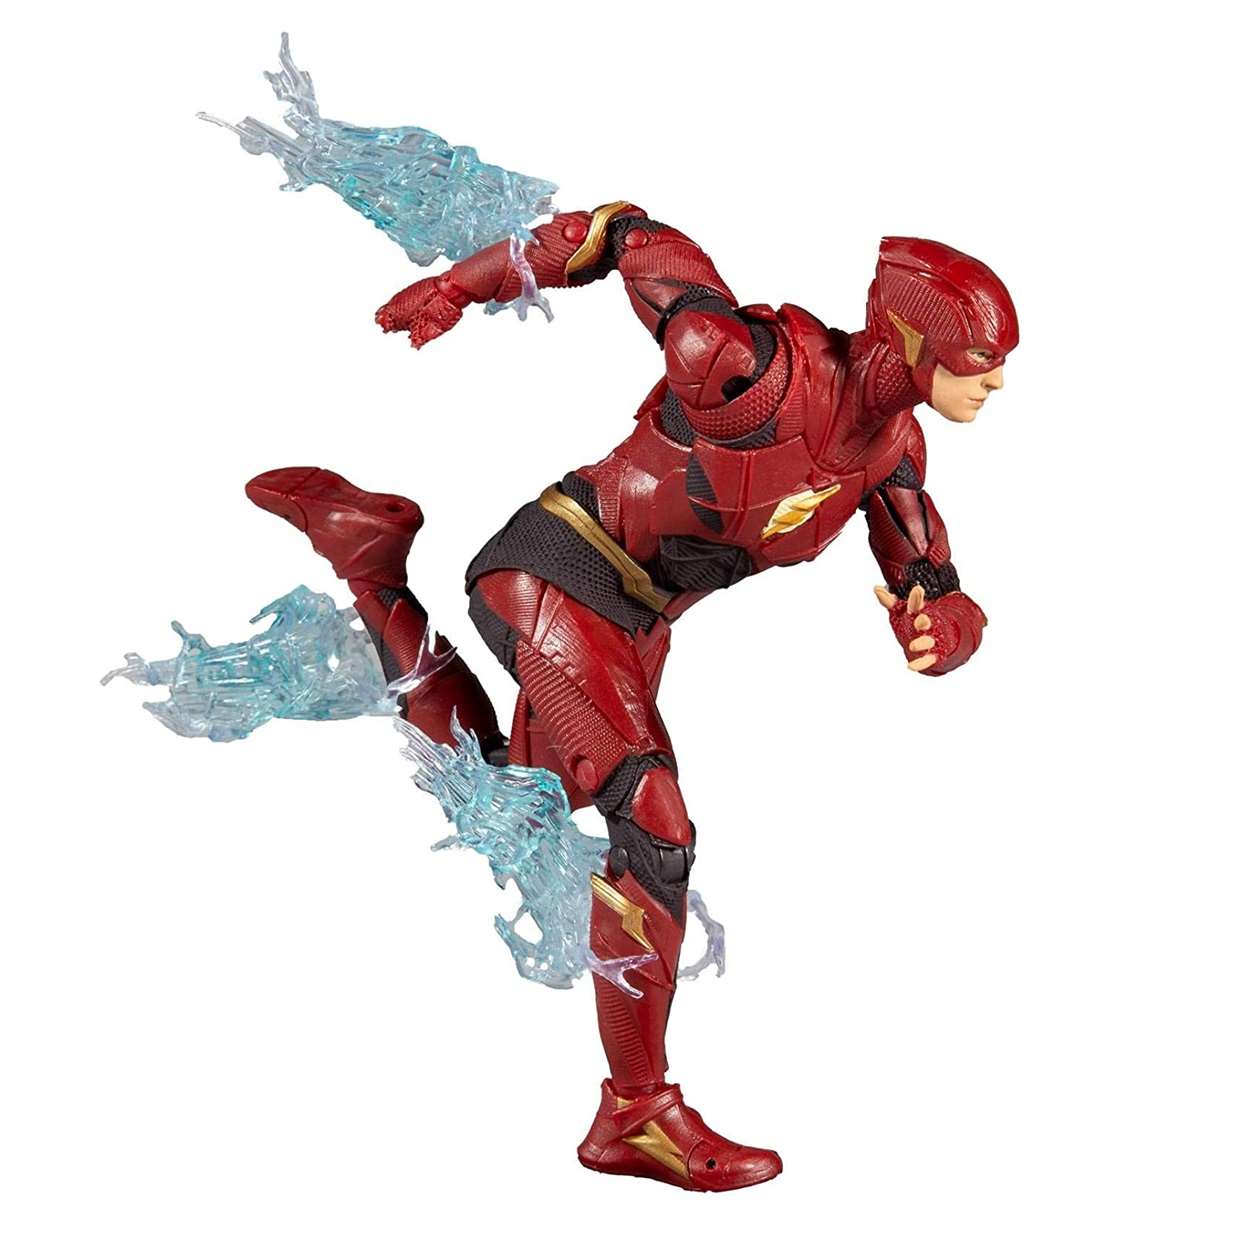 The Flash Figura Justice League Zack Snayder 2021 Mc Farlane